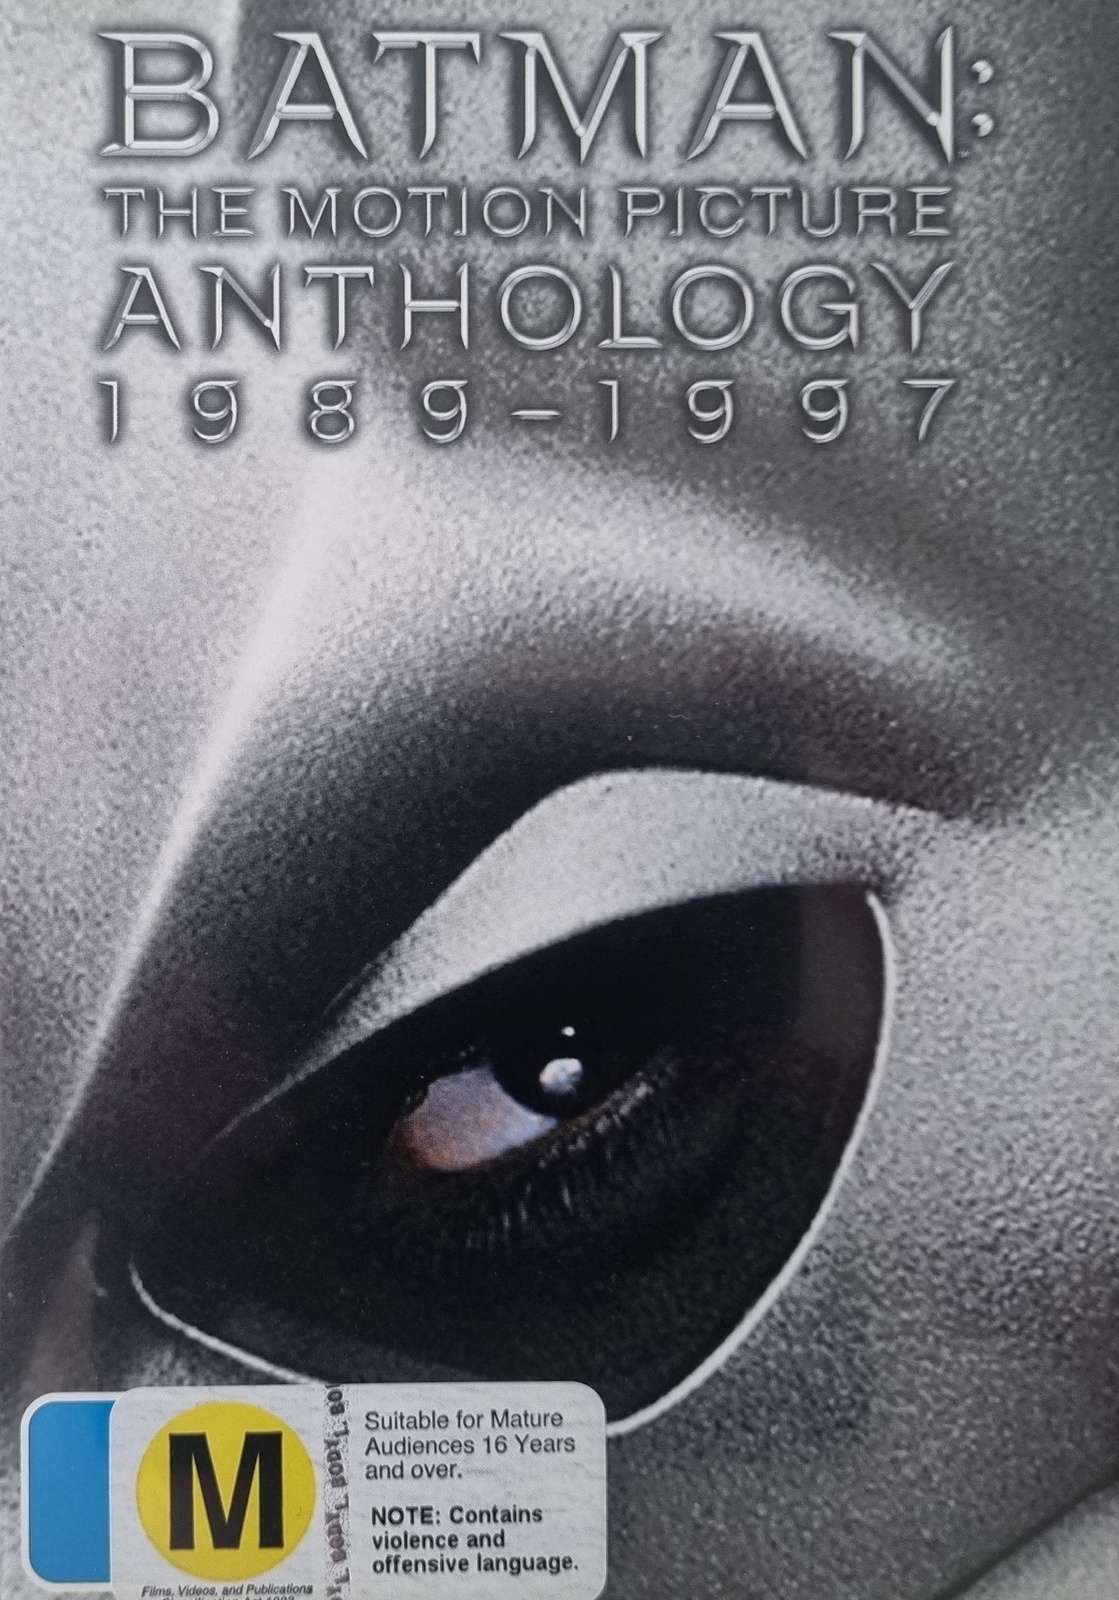 Batman: The Motion Picture Anthology 1989 - 1997 (DVD)